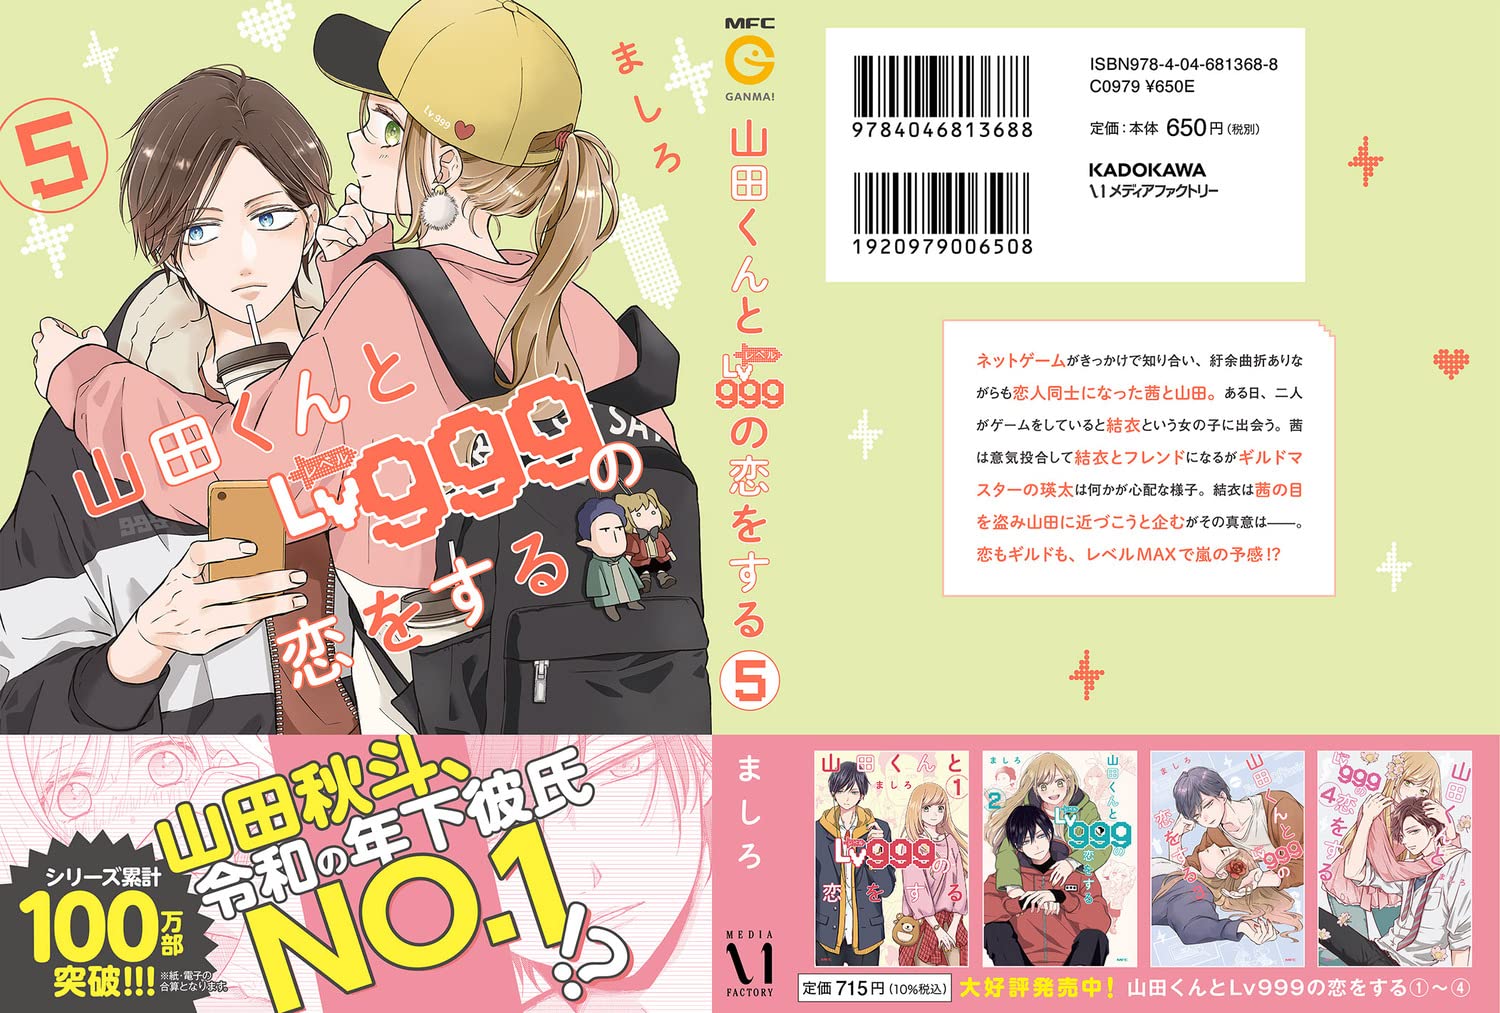 Volume 1, My Love Story with Yamada-kun at Lv999